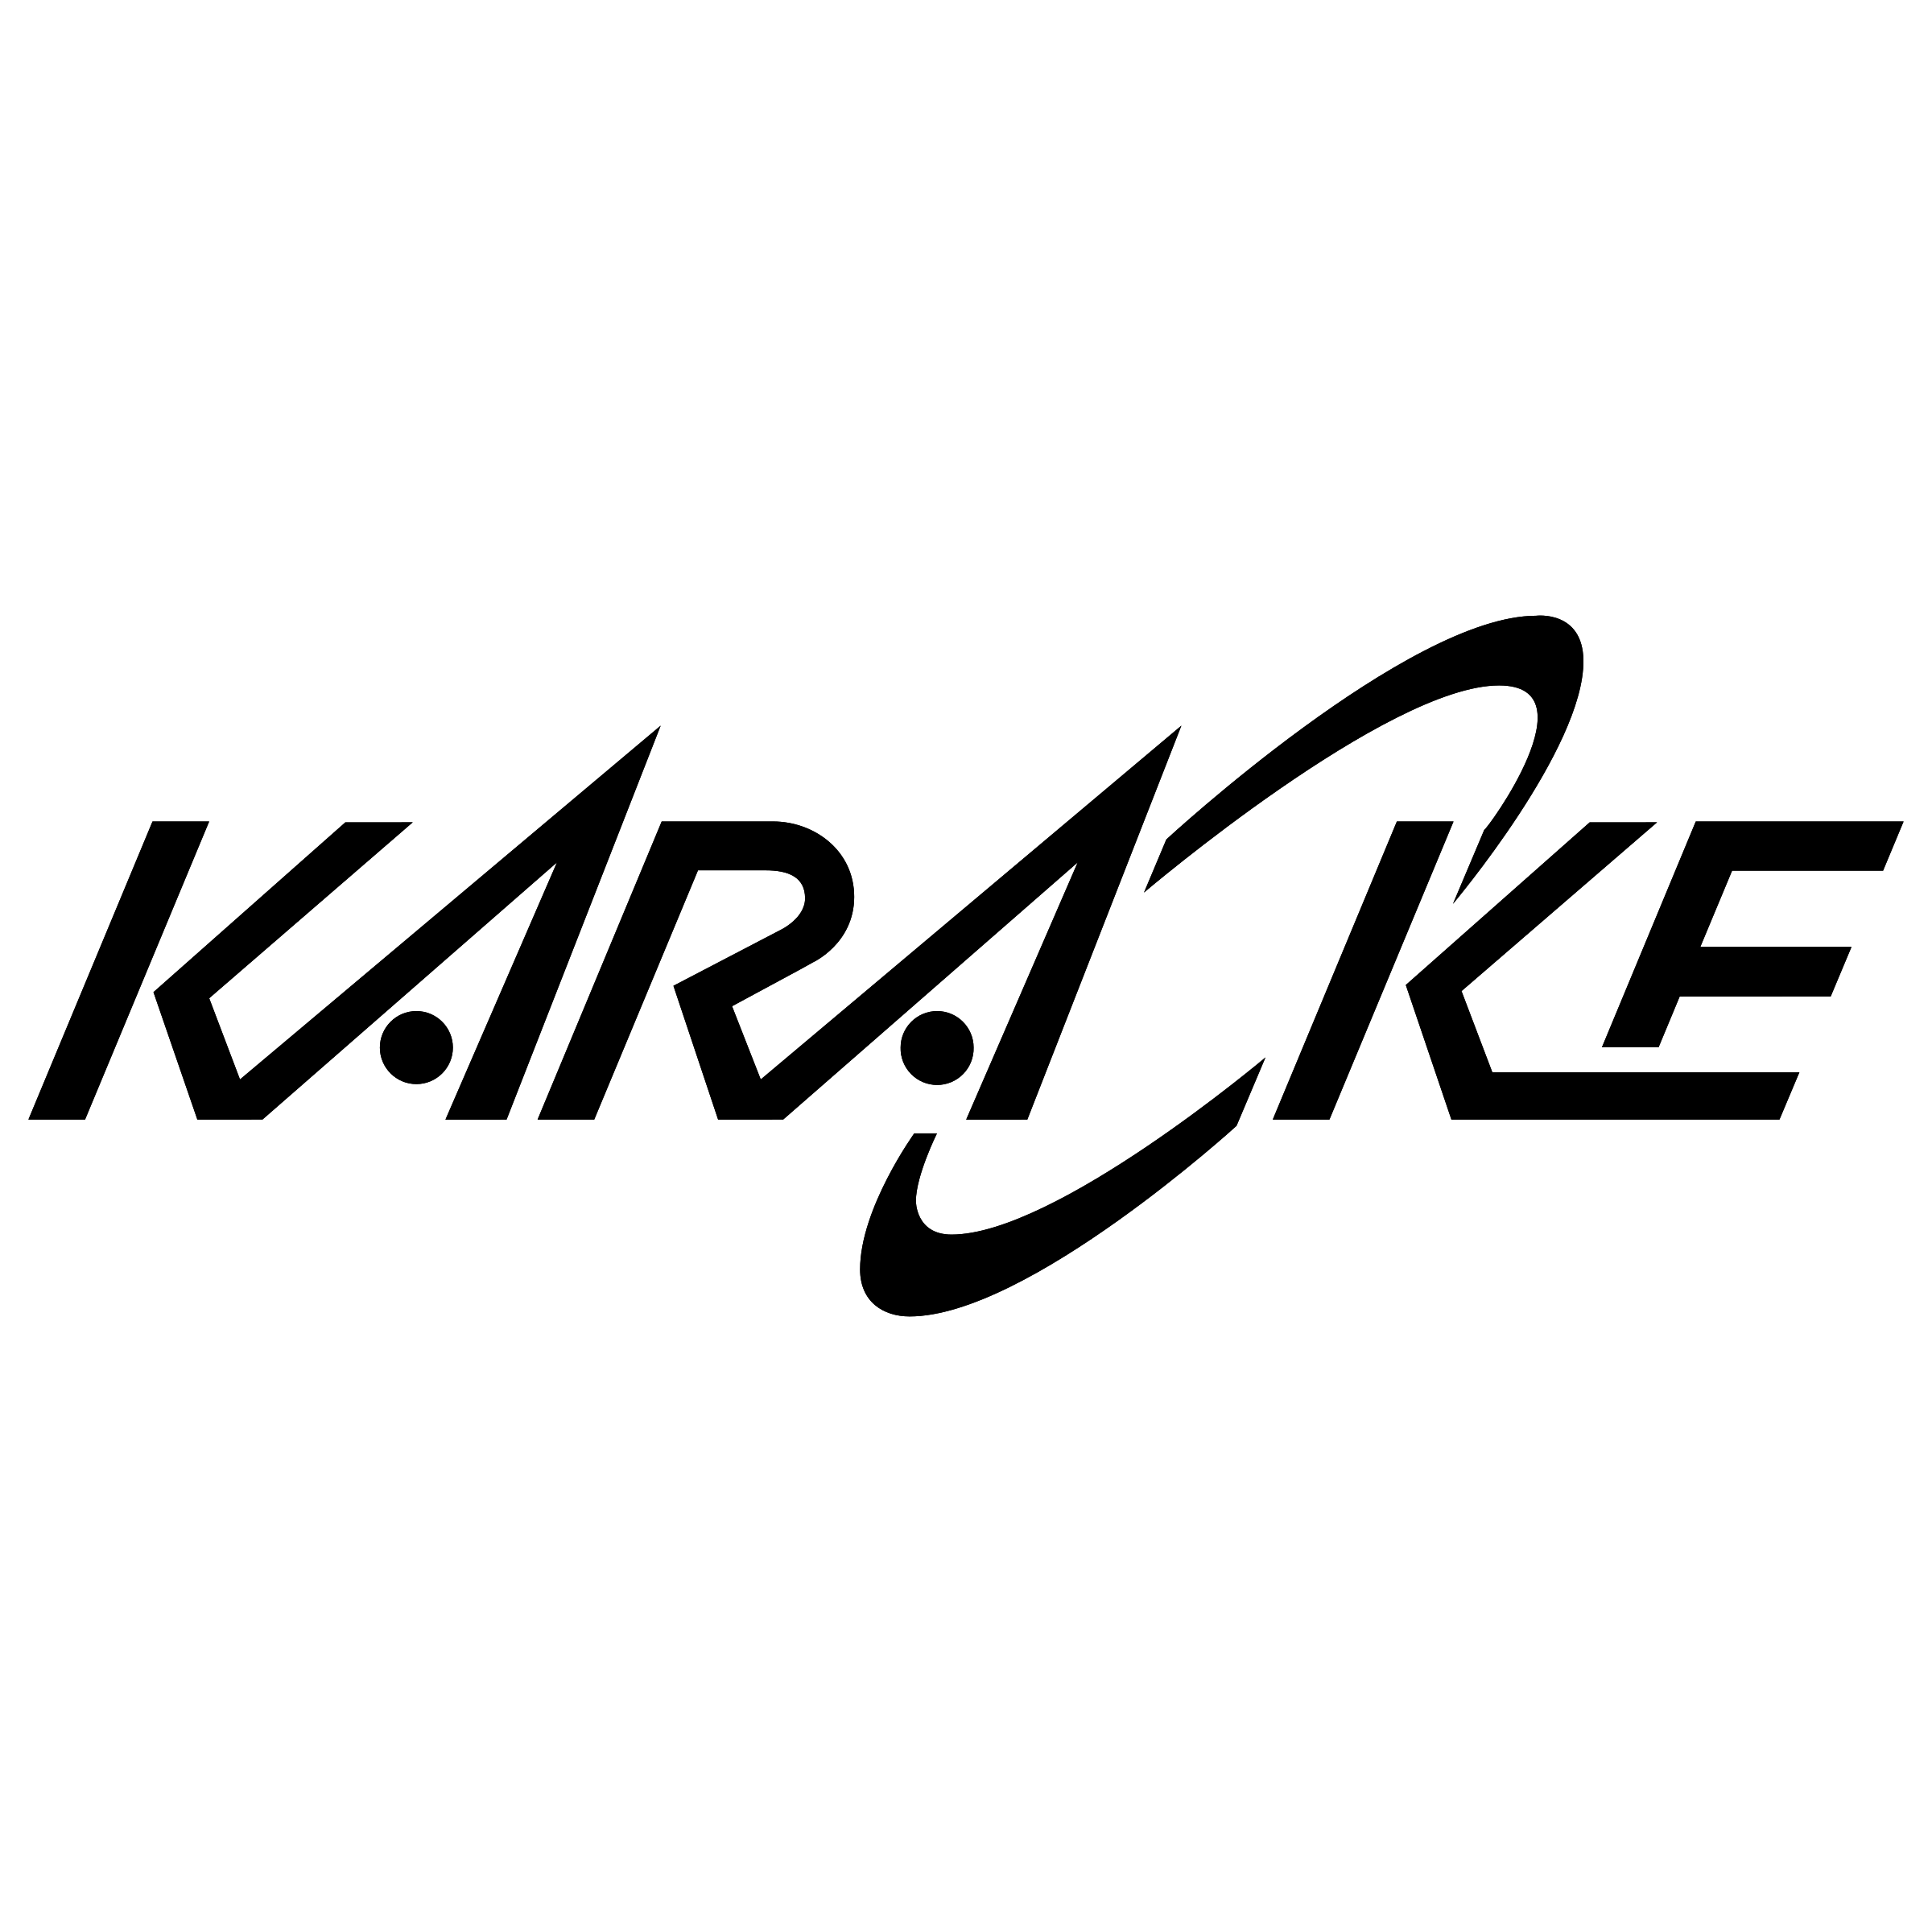 Karaoke Logo - Karaoke Logo PNG Transparent & SVG Vector - Freebie Supply